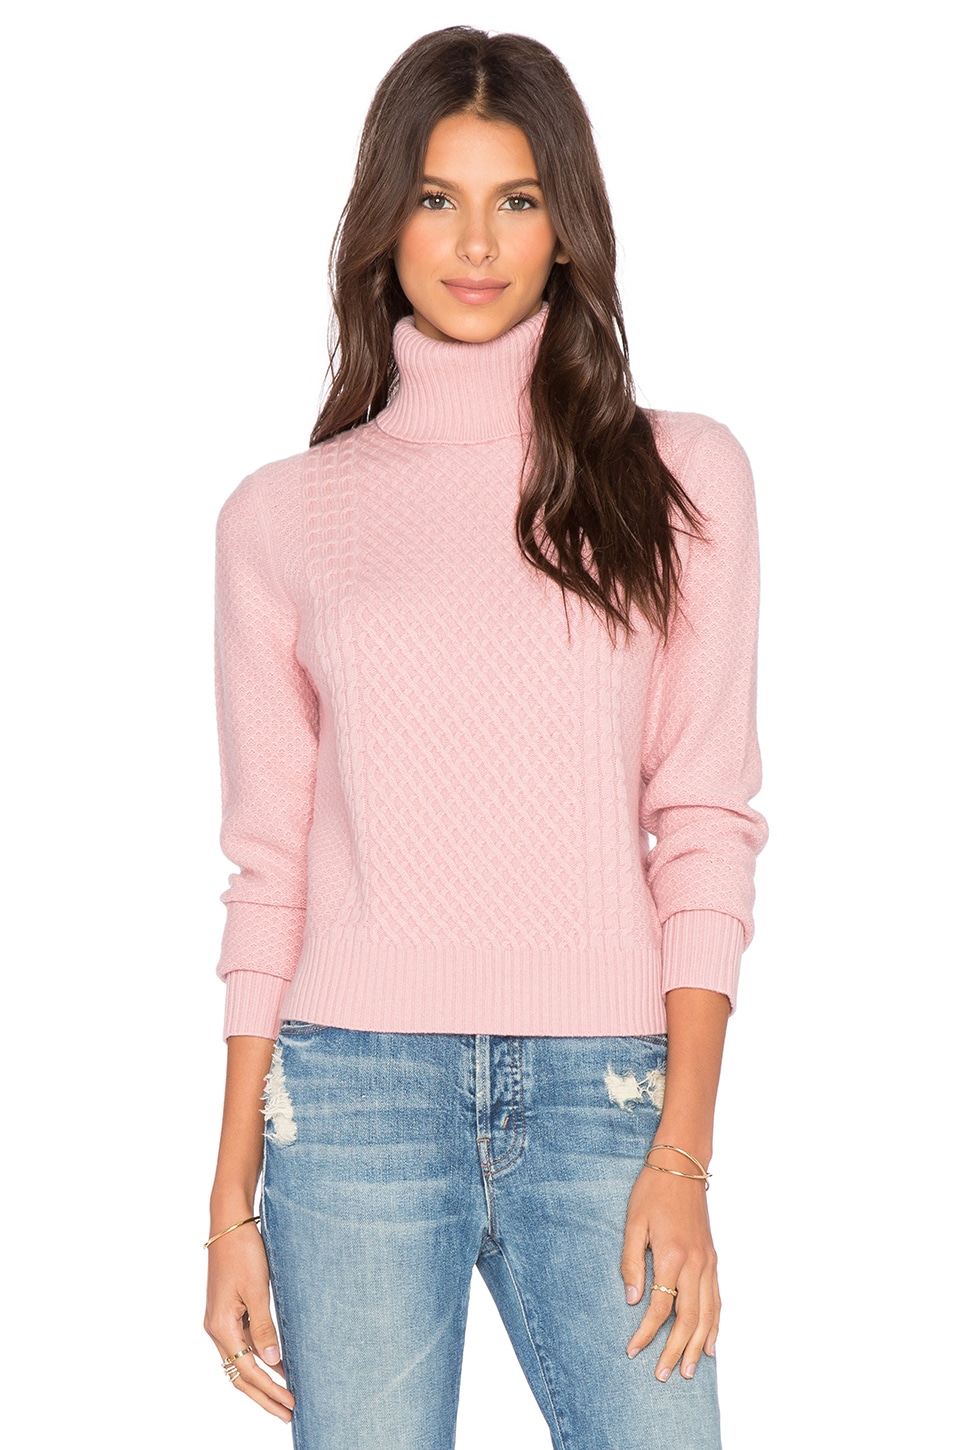 Equipment Cable Stitch Atticus Turtleneck Sweater in Blush Pink | REVOLVE